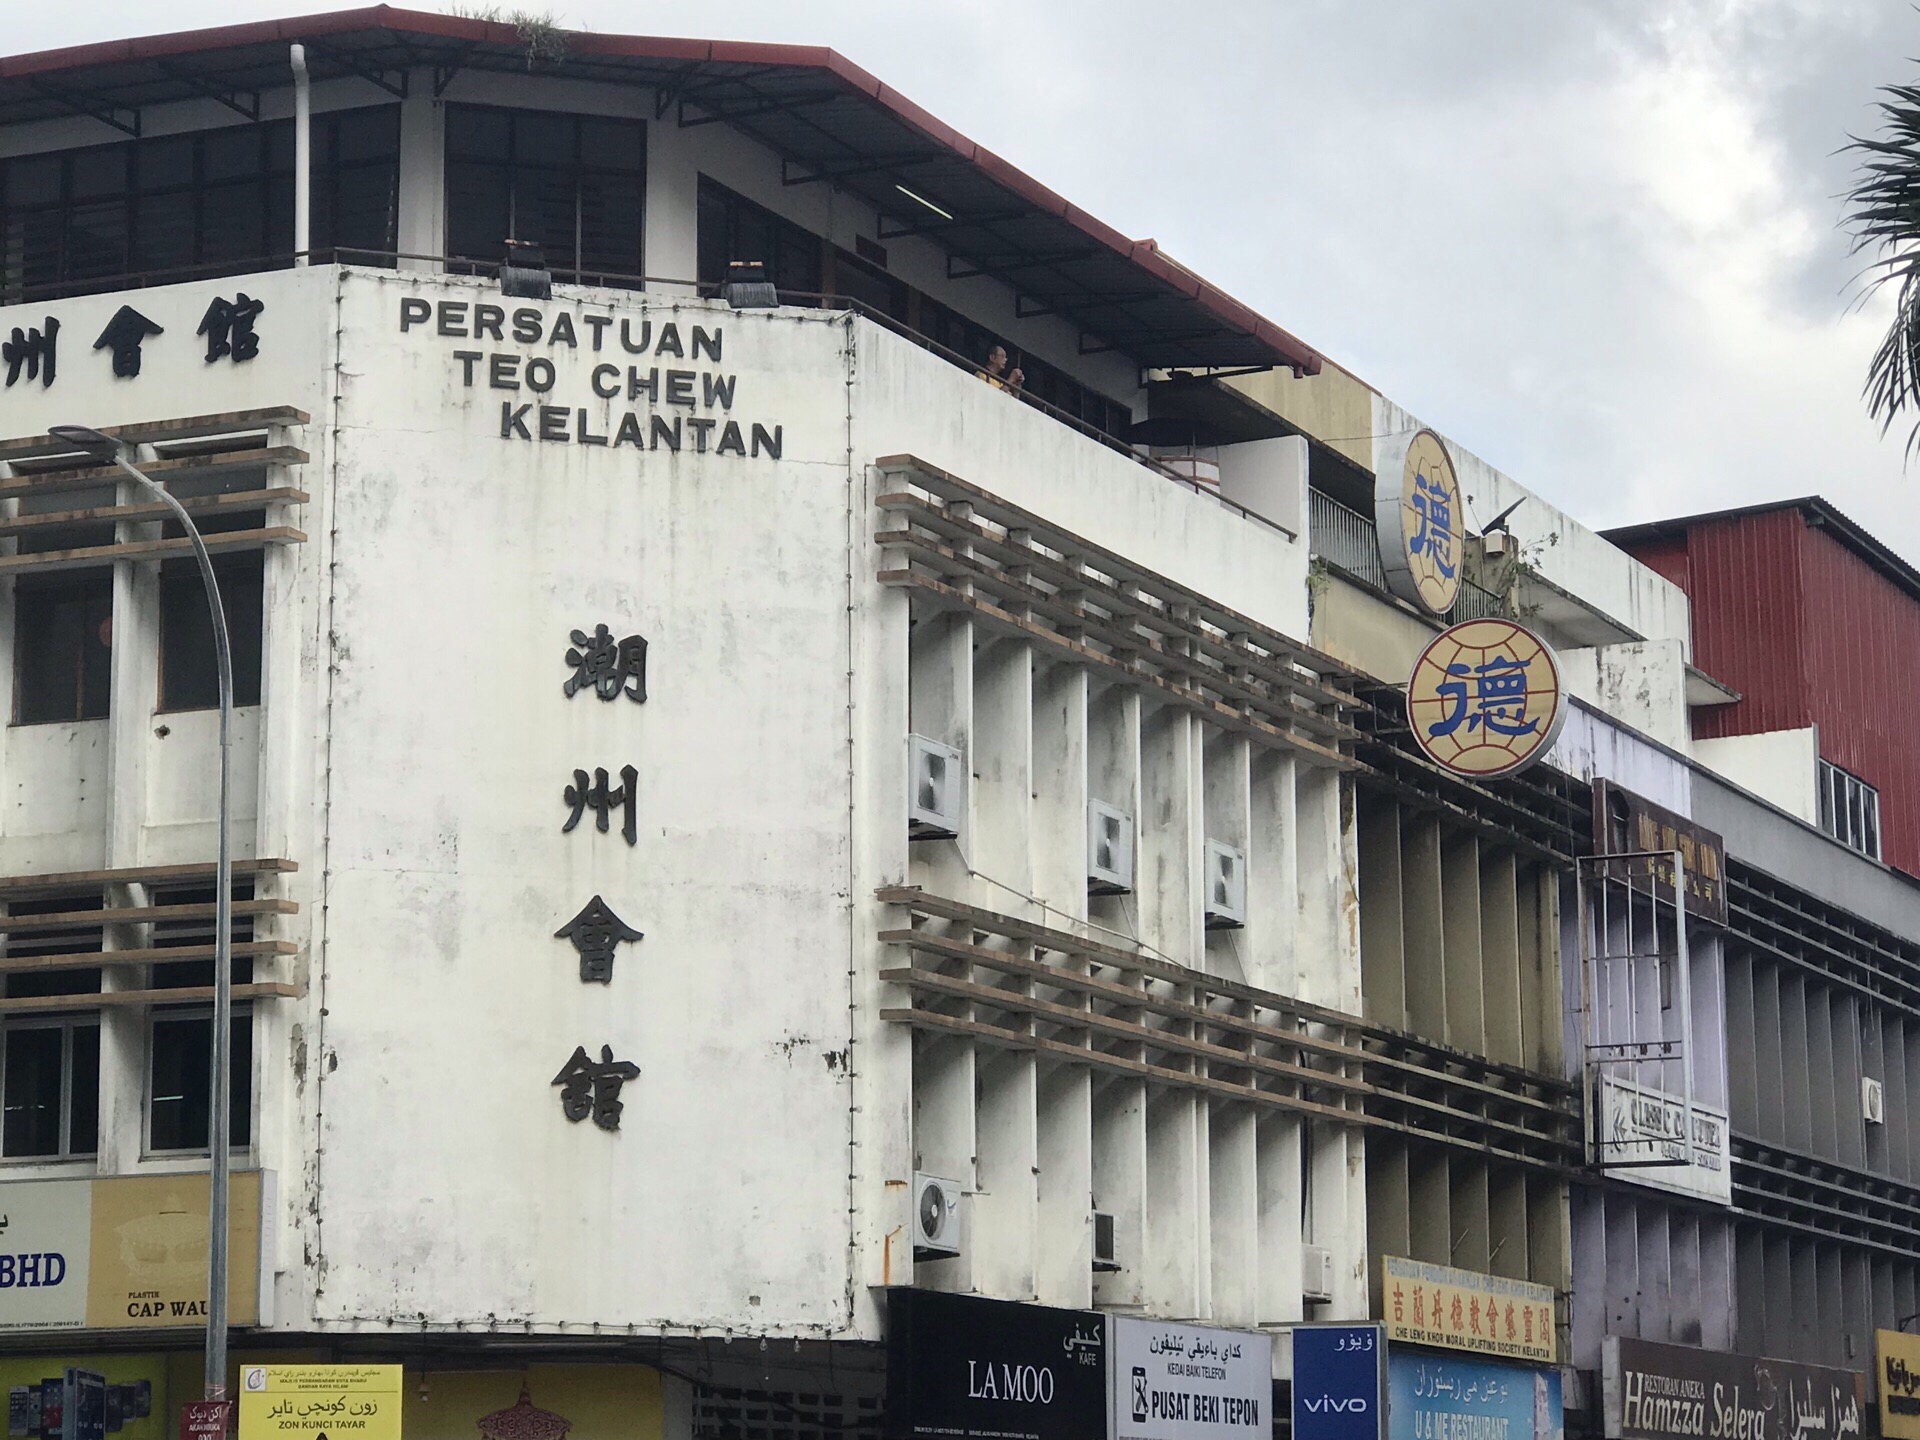 哥打巴鲁Renai大酒店(The Grand Renai Kota Bahru) 标记——马来西亚（